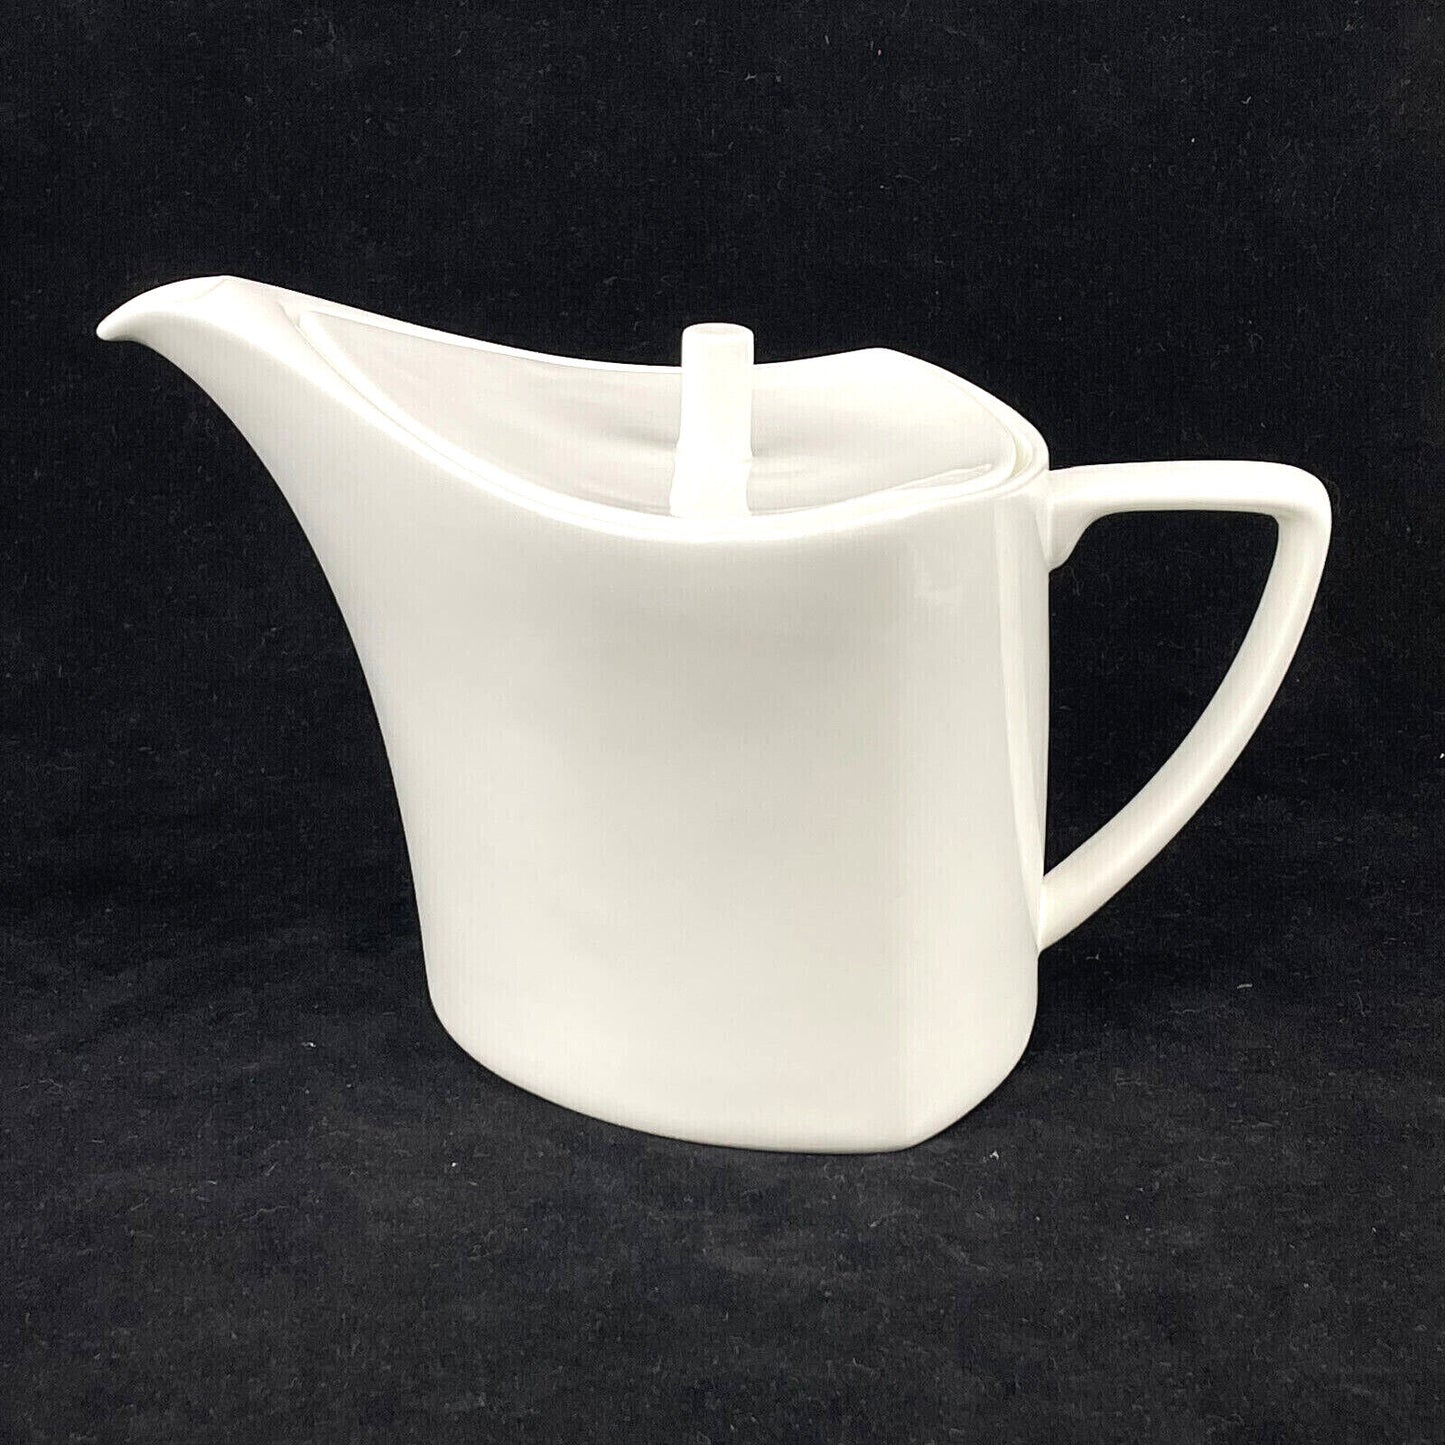 Unique Mid-Century Angular Teapot by Oneida